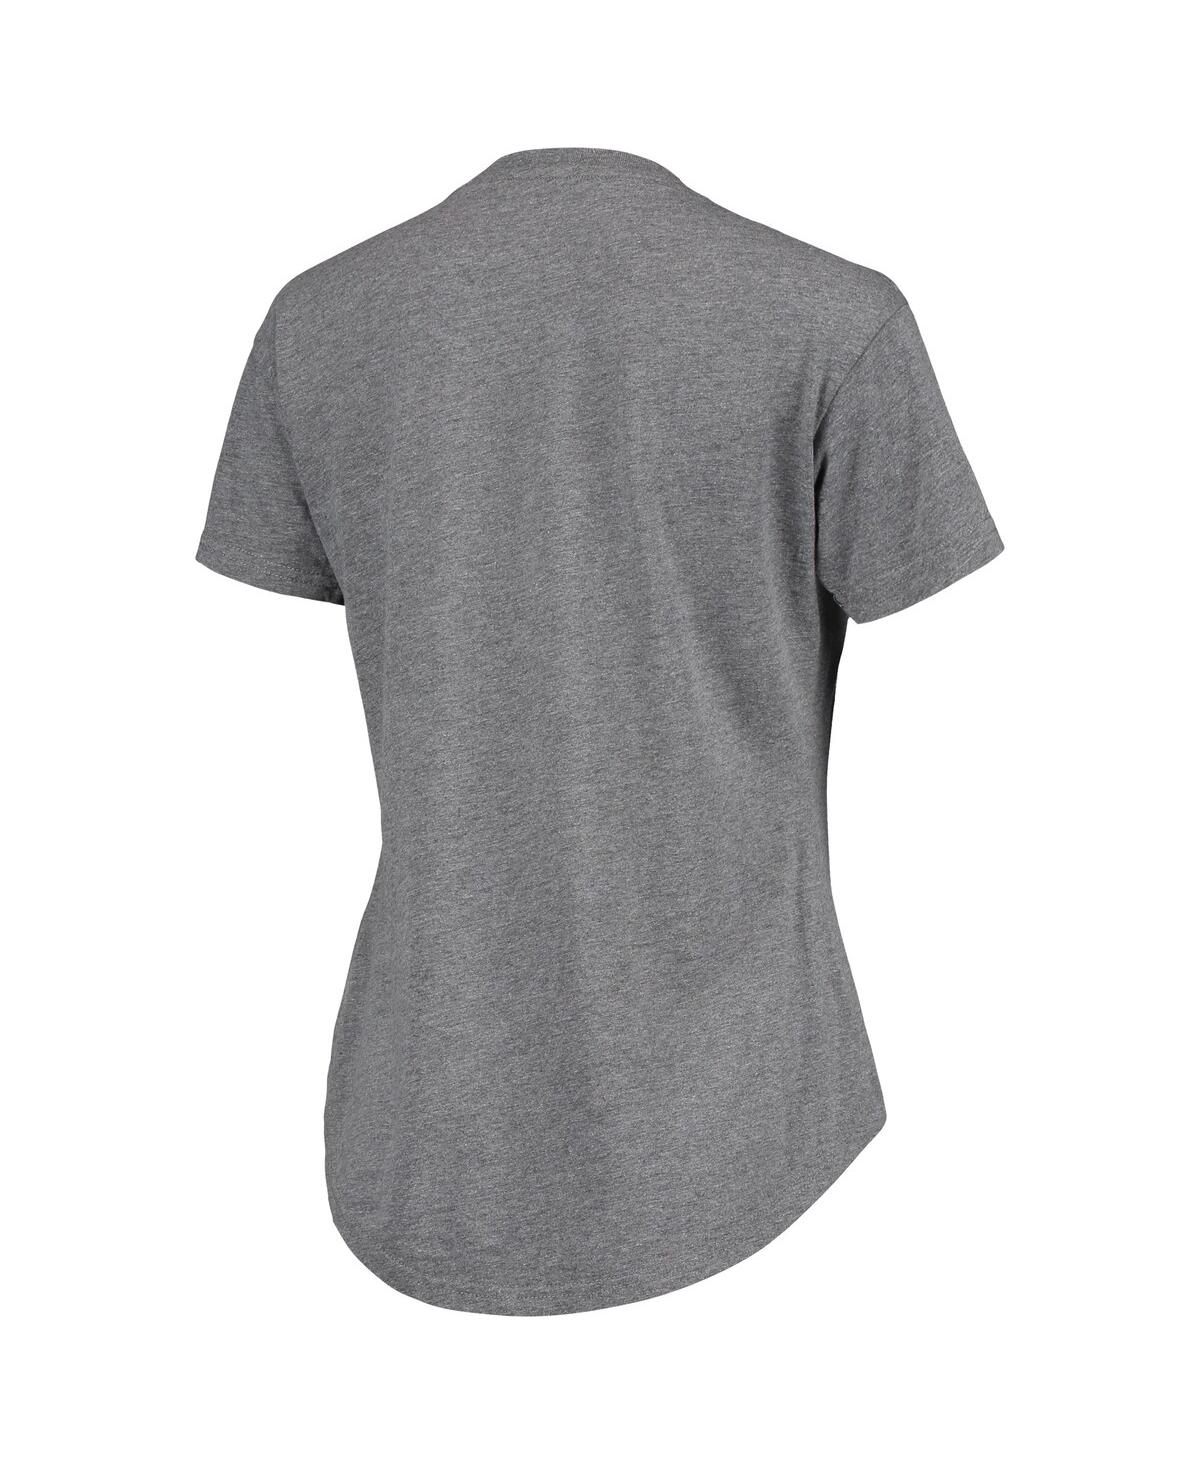 Shop Sportiqe Women's  Heathered Gray Charlotte Hornets Tri-blend Phoebe T-shirt